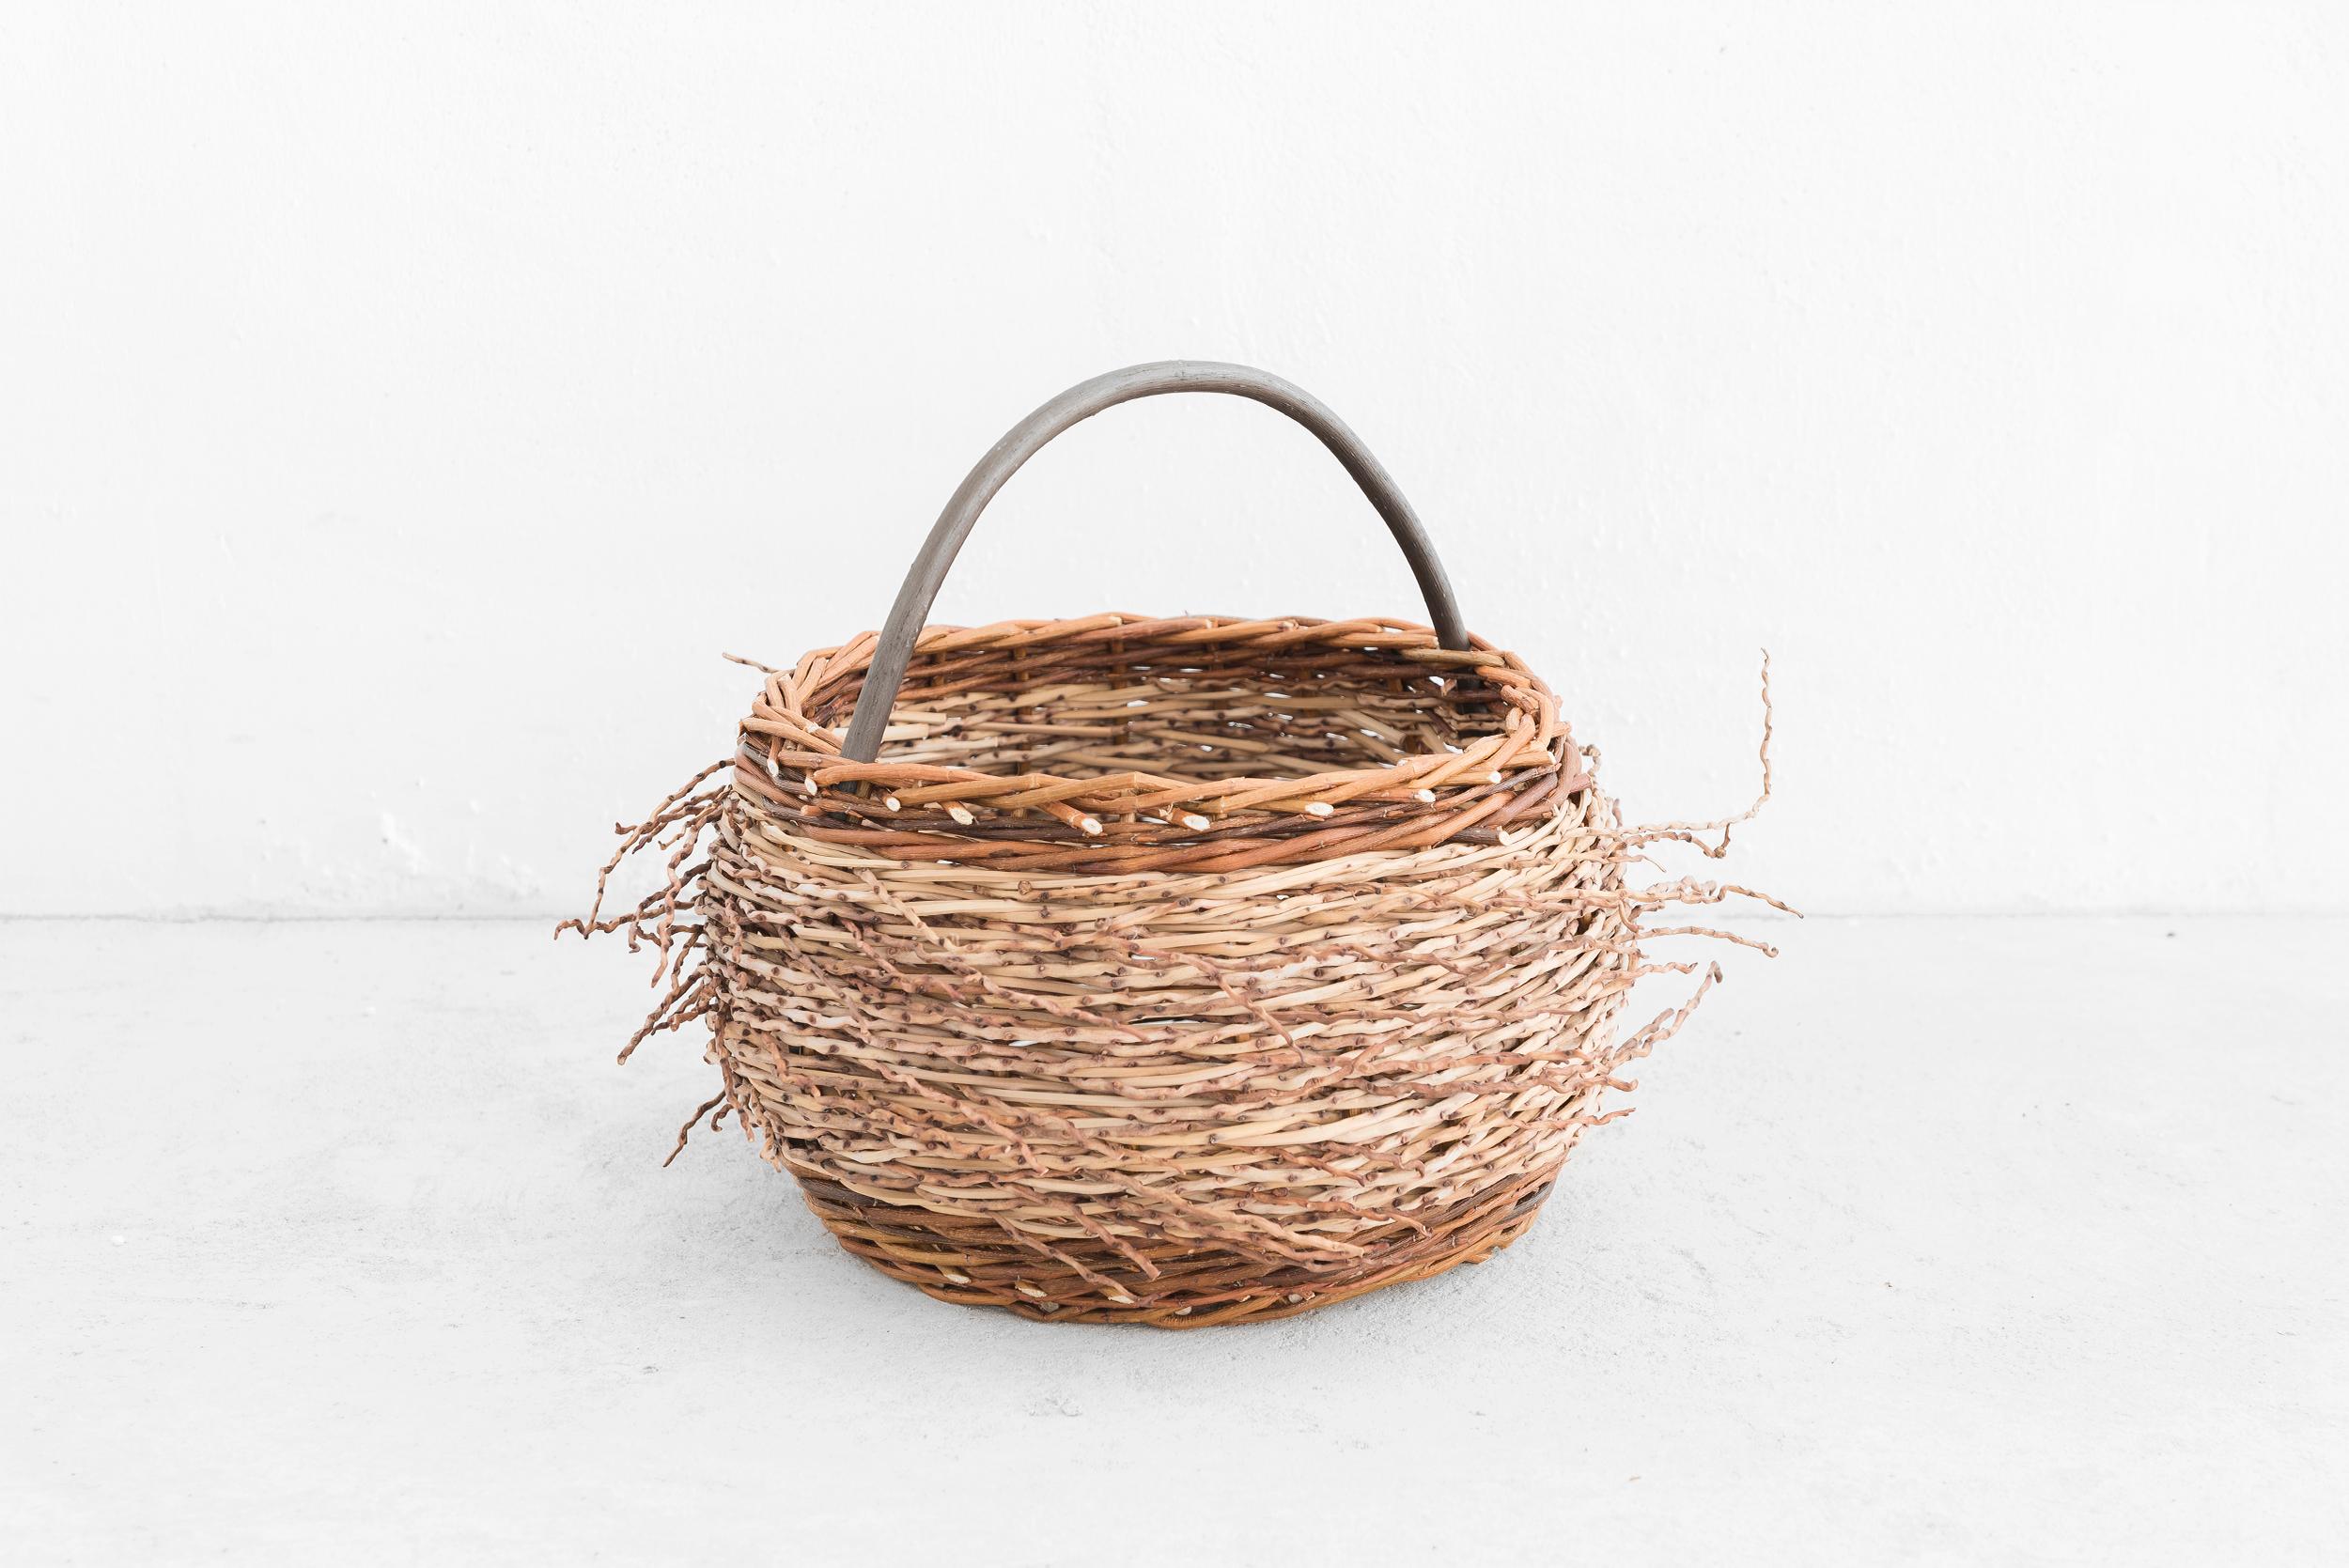 European Mónica Guilera Subirana, Willow and Date Palm Contemporary Crafts Basket, 2020